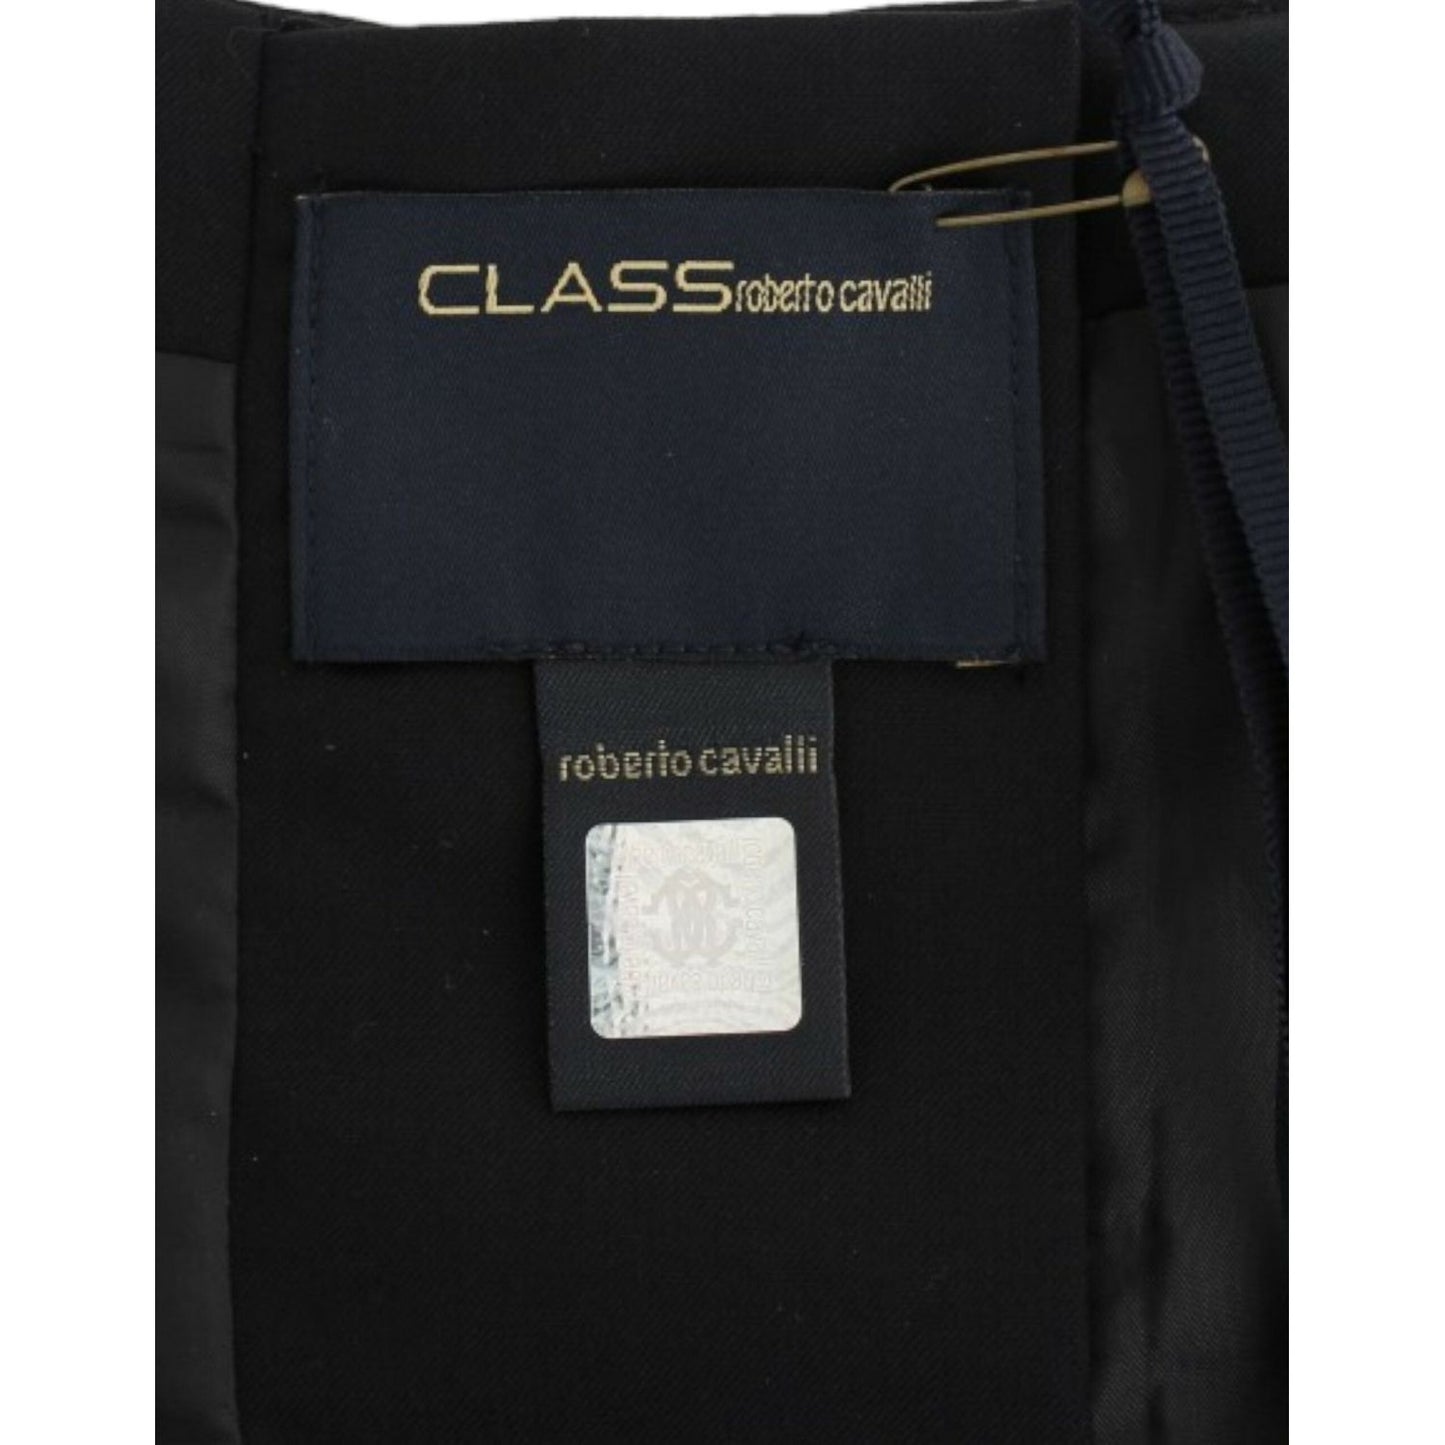 Cavalli Elegant Black Pleated Lace A-Line Skirt black-pleated-laced-skirt 9831-black-pleated-laced-skirt-6-scaled-1222cb04-9f6.jpg